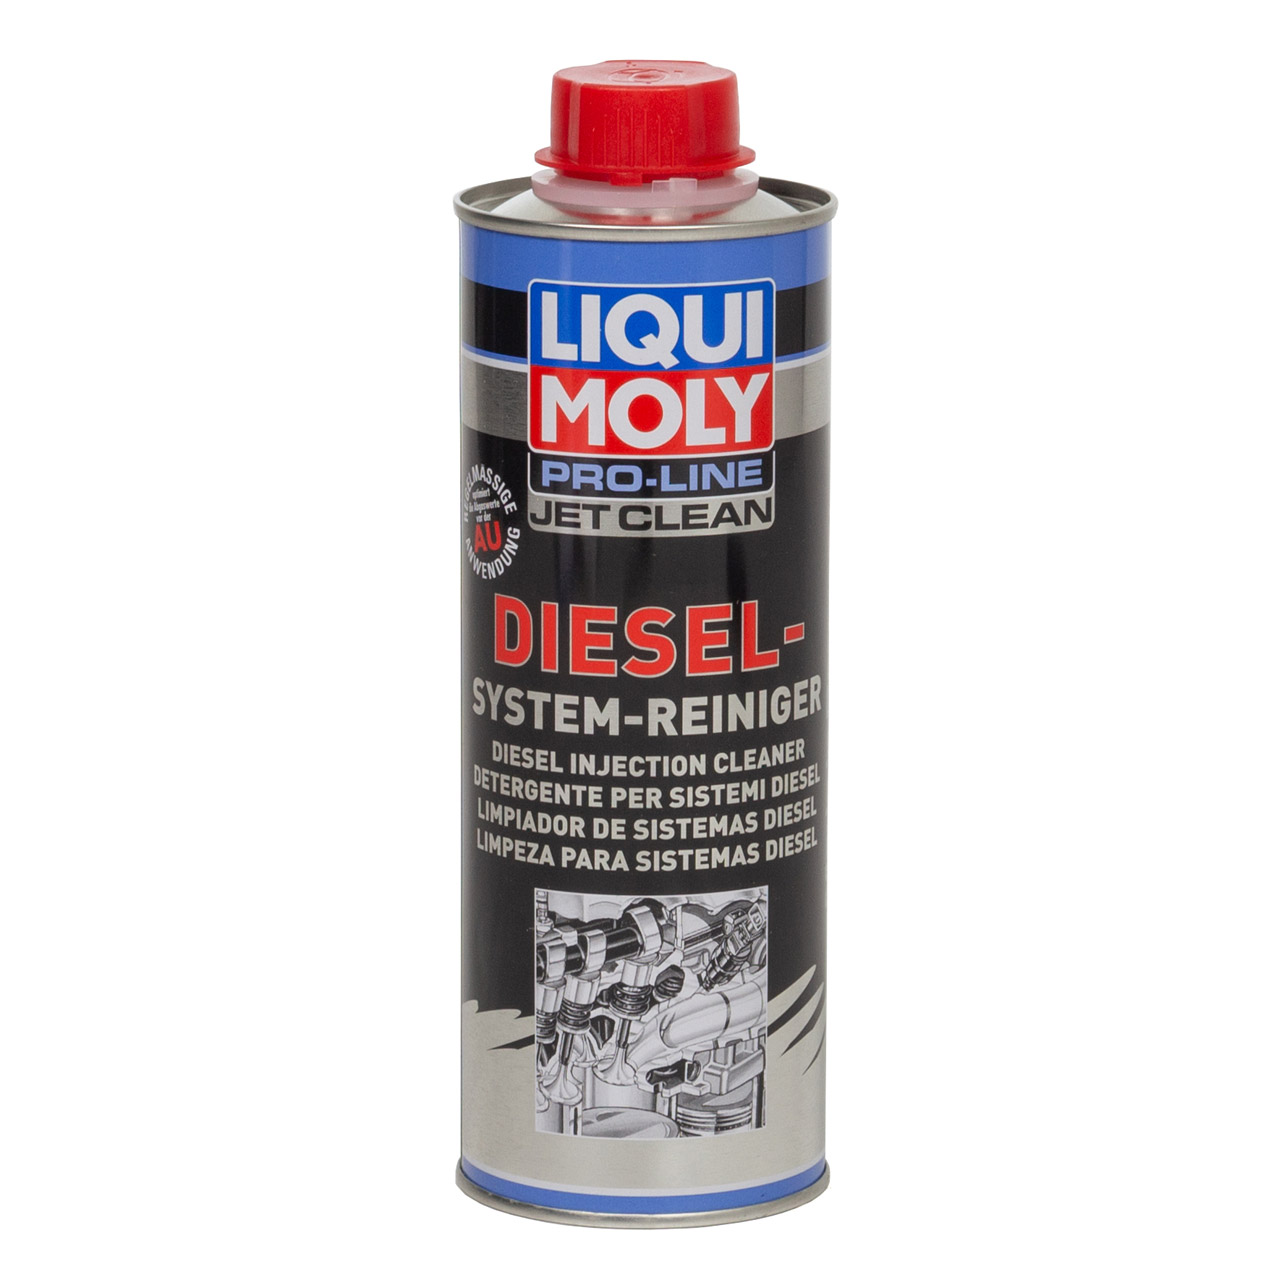 LIQUI MOLY Kraftstoff-Additive / Motoröl-Additive - 5154 - ws